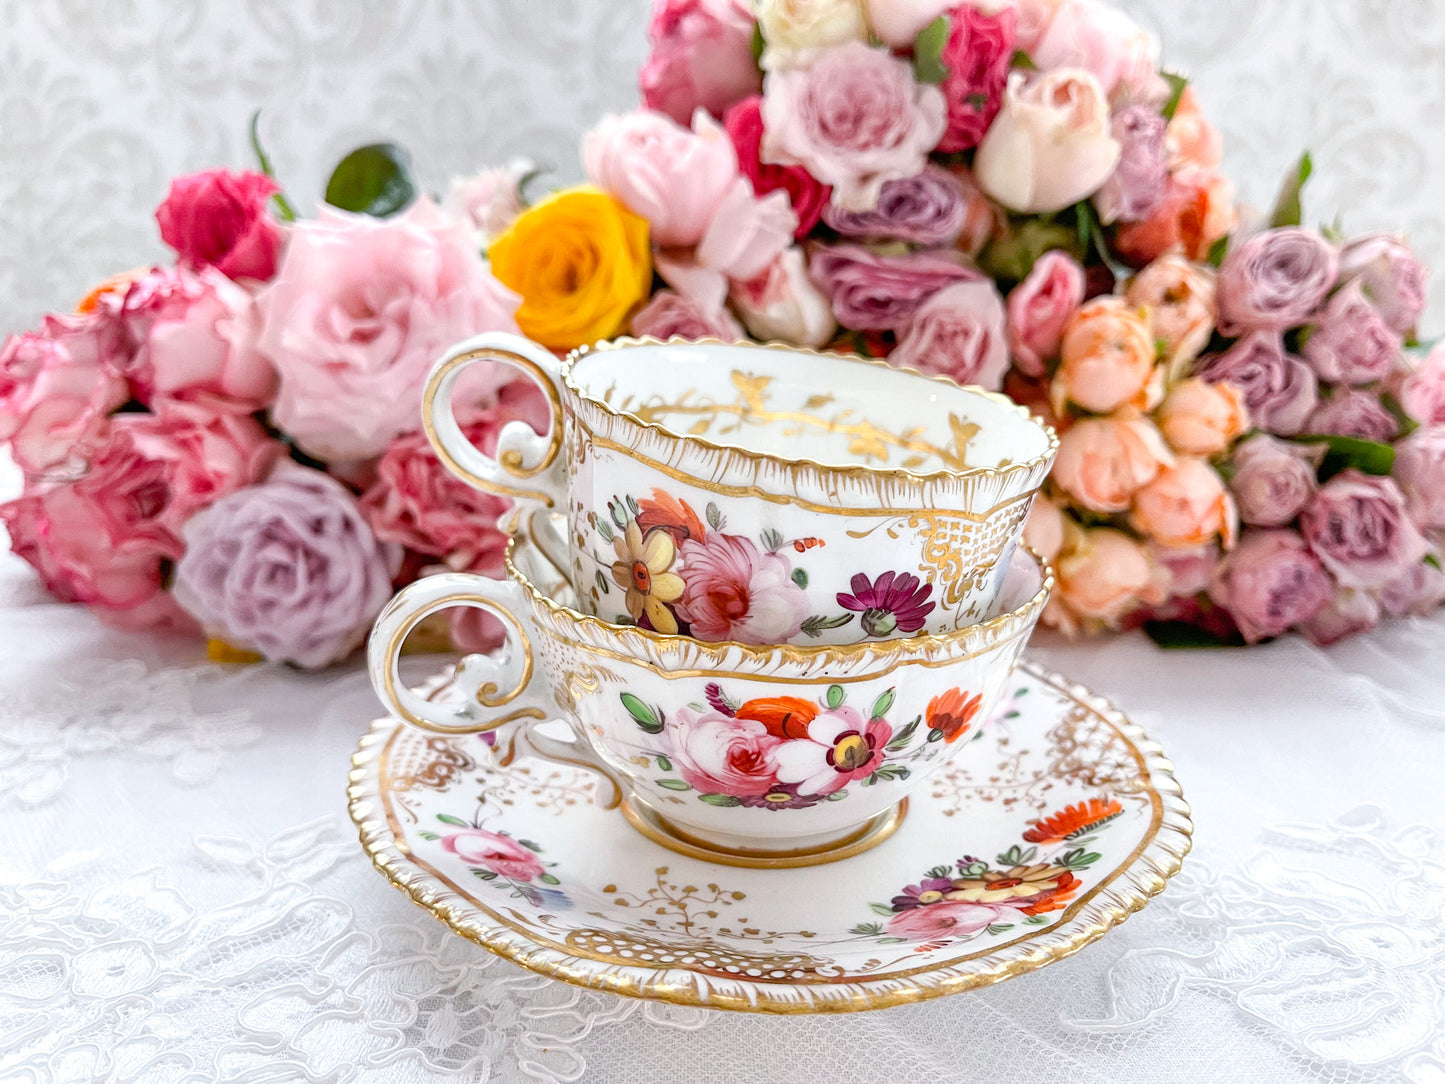 Rose Antiquesの英国アンティーク。コールポートのペンブロークシェイプのトゥルートリオ。コーヒーカップ、ティーカップ、ソーサーのセットで手書きで描かれた花々が大変美しいです。